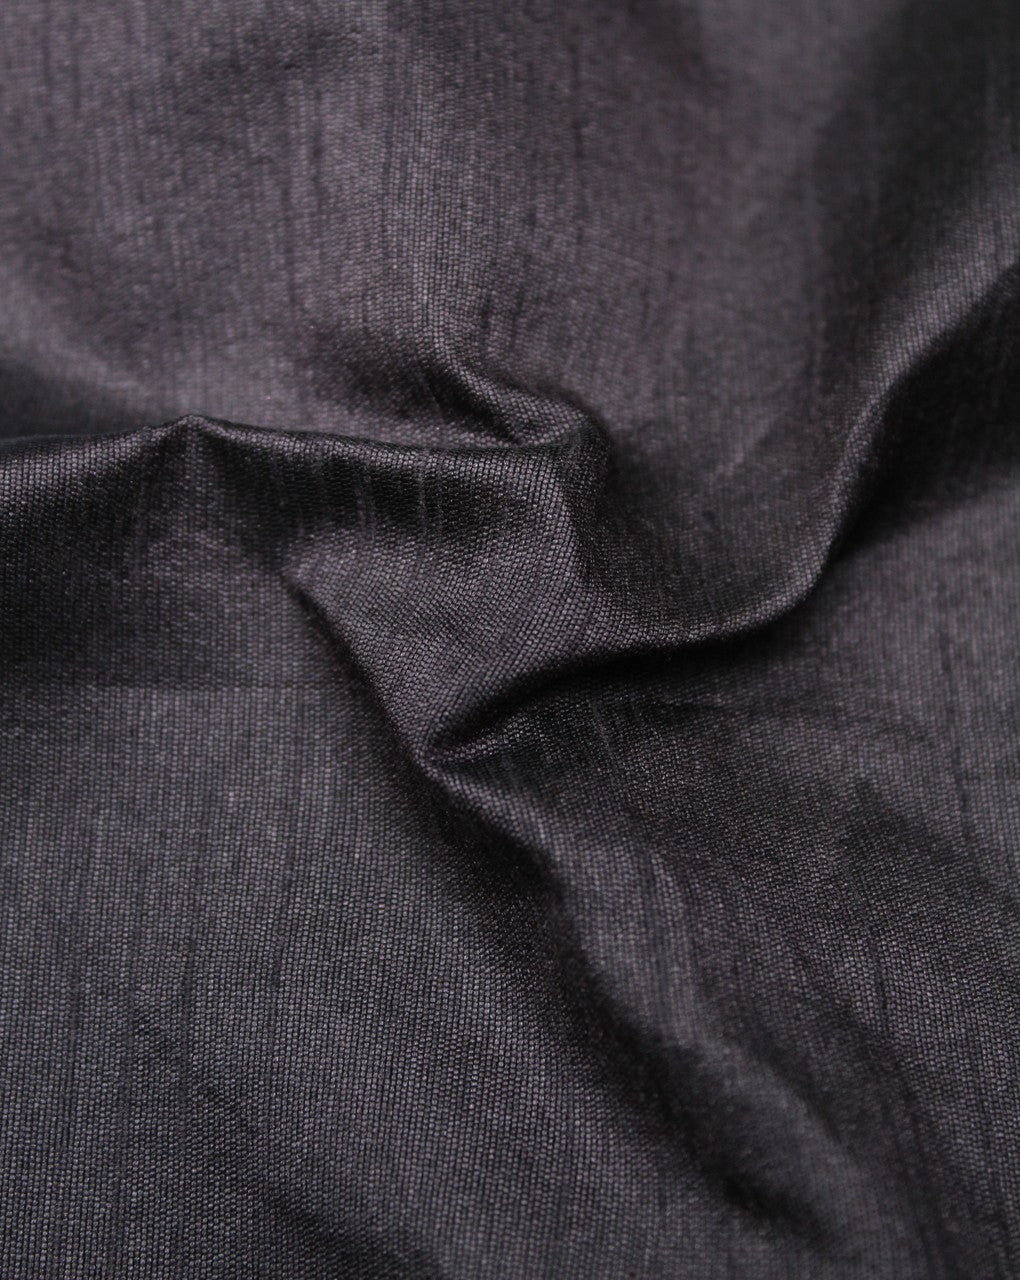 Plain DarkBrown Poly Dupion Fabric